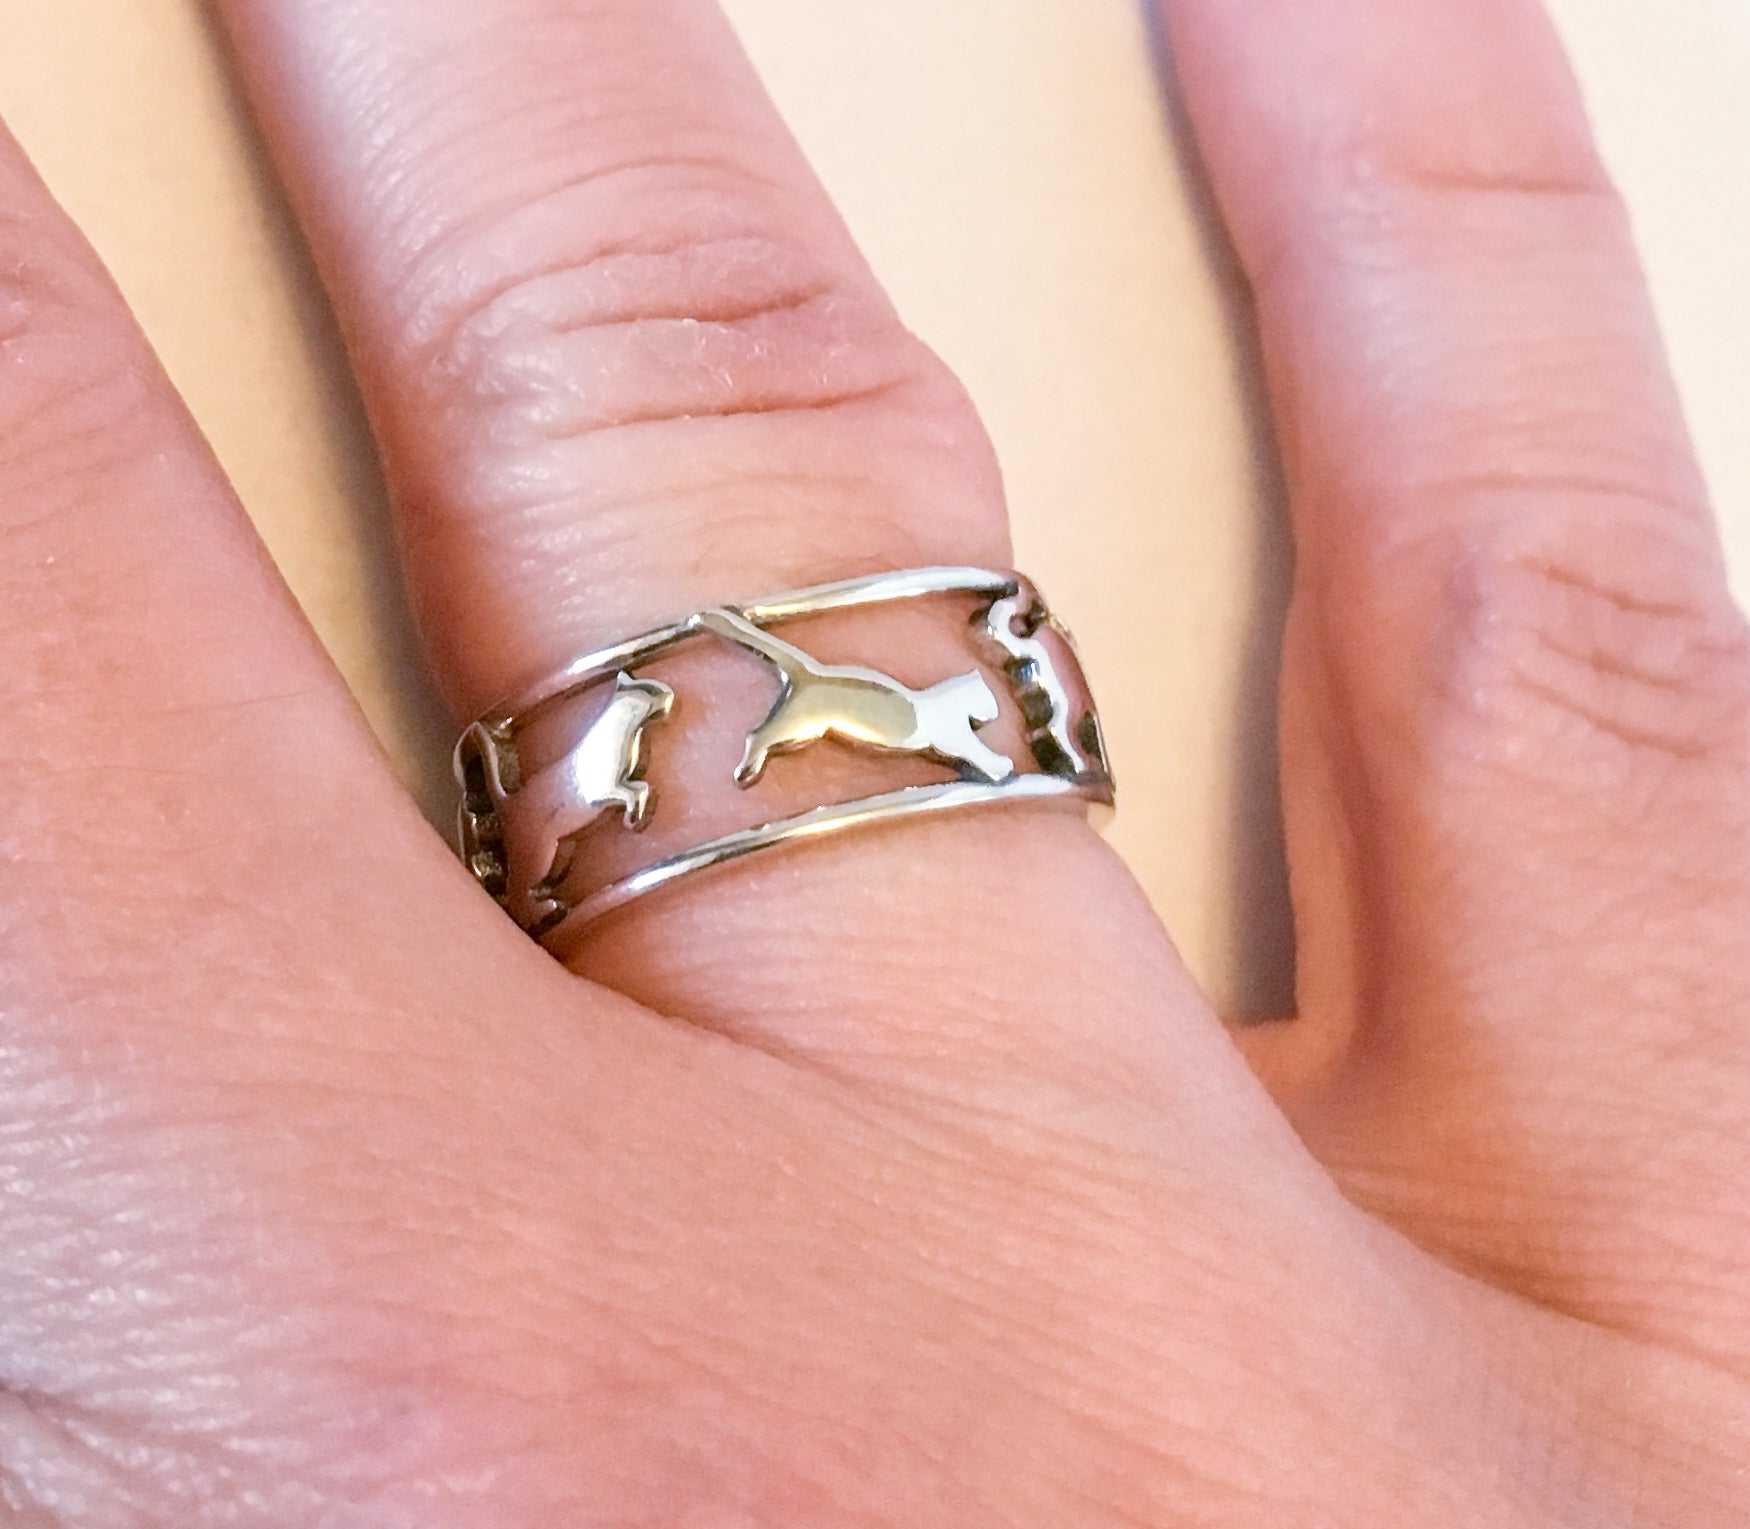 Silver cat ring on finger